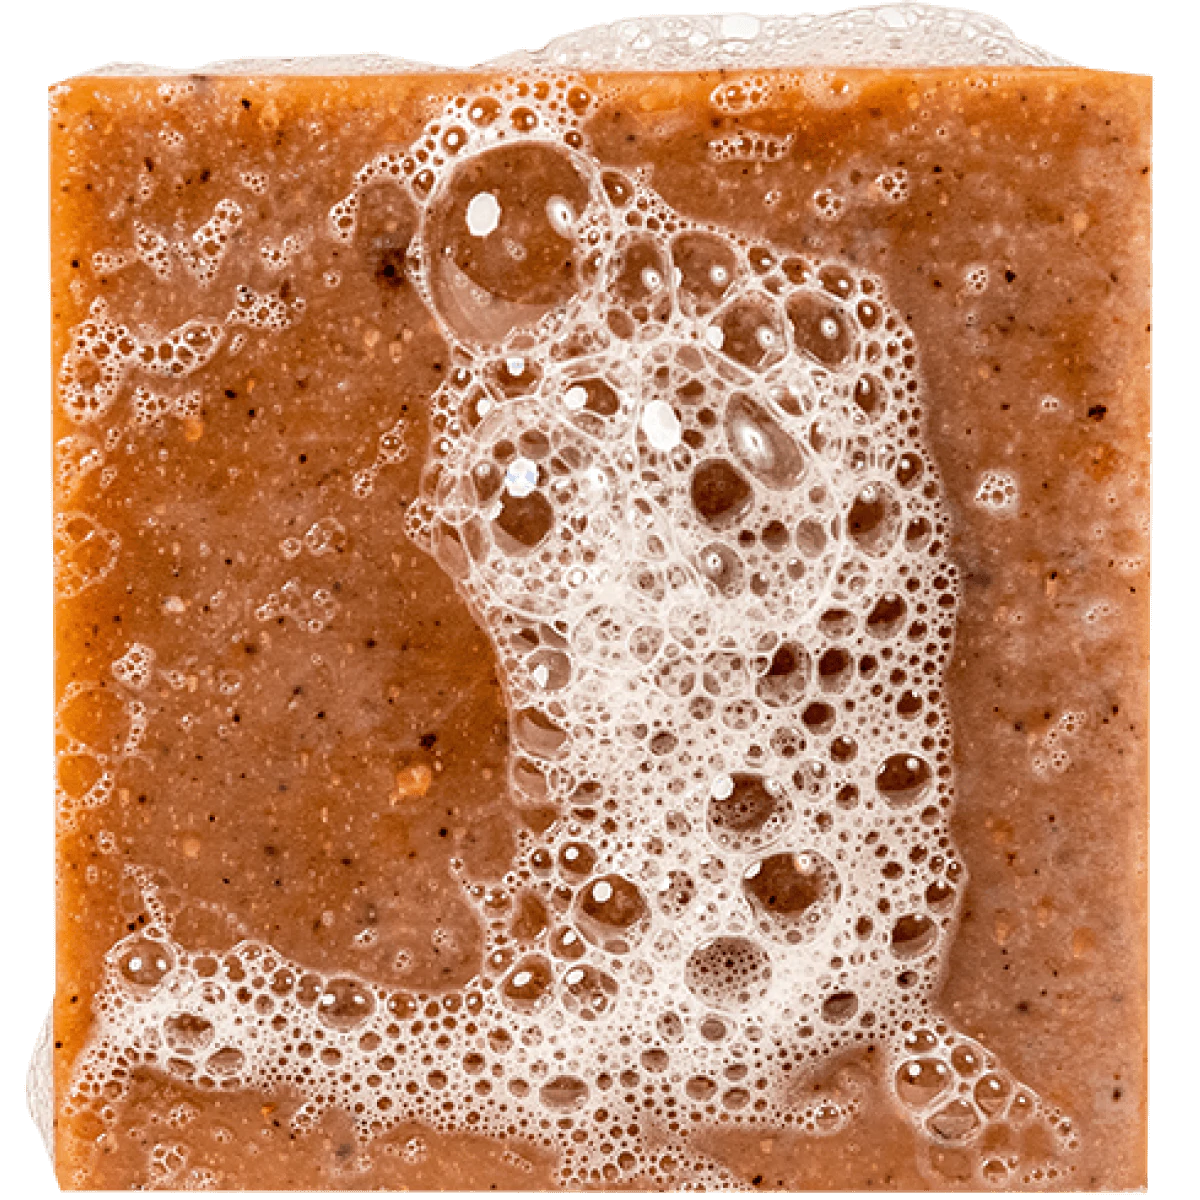 Dr. Squatch Natural Soap for Men - Wood Barrel Bourbon, 5 oz